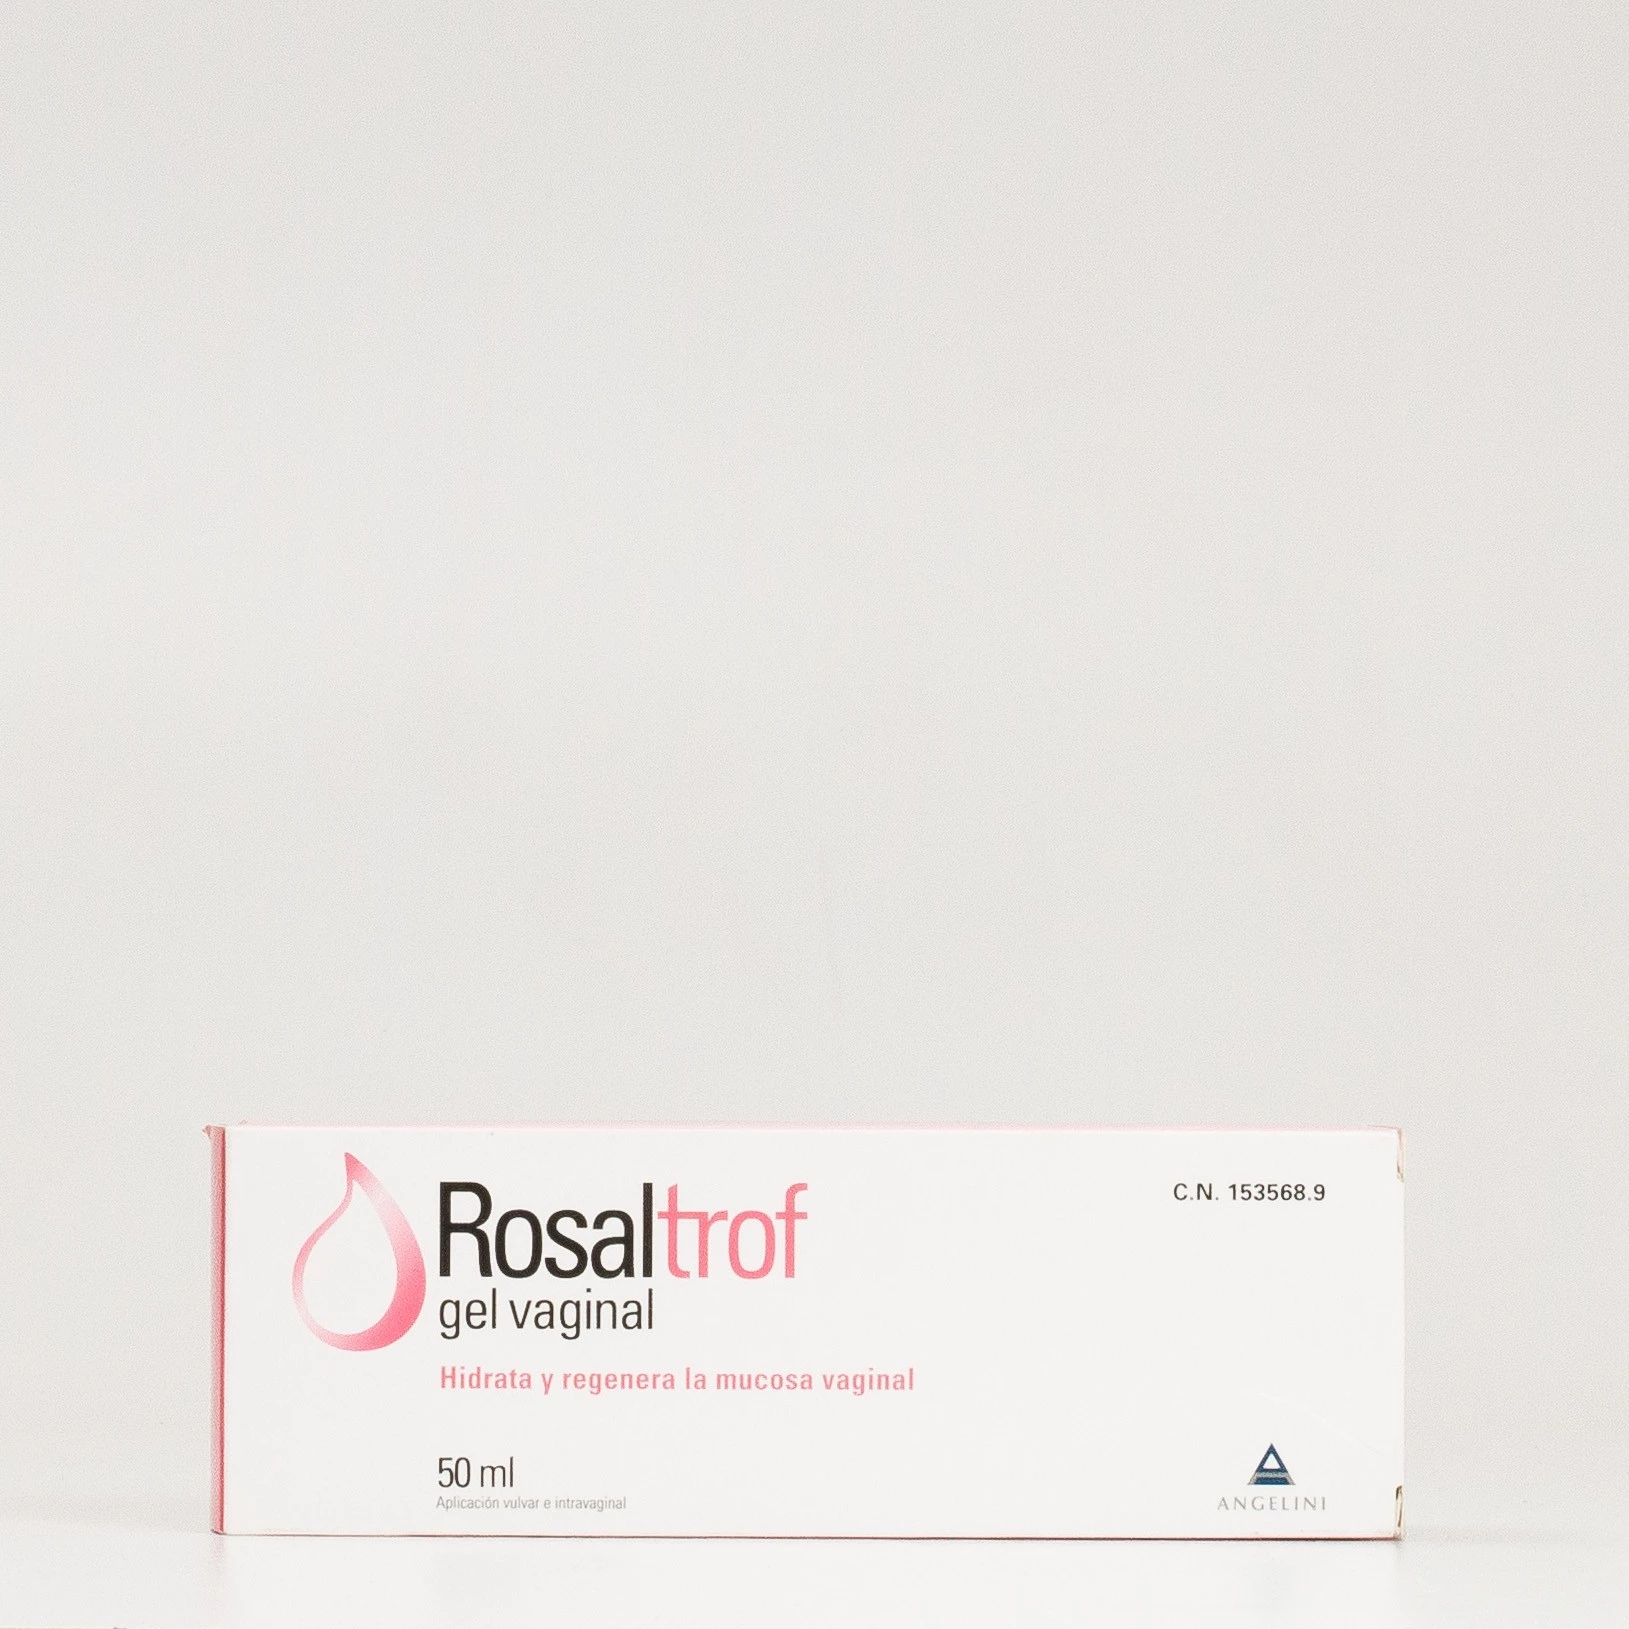 Rosaltrof Gel Vaginal, 50ml.